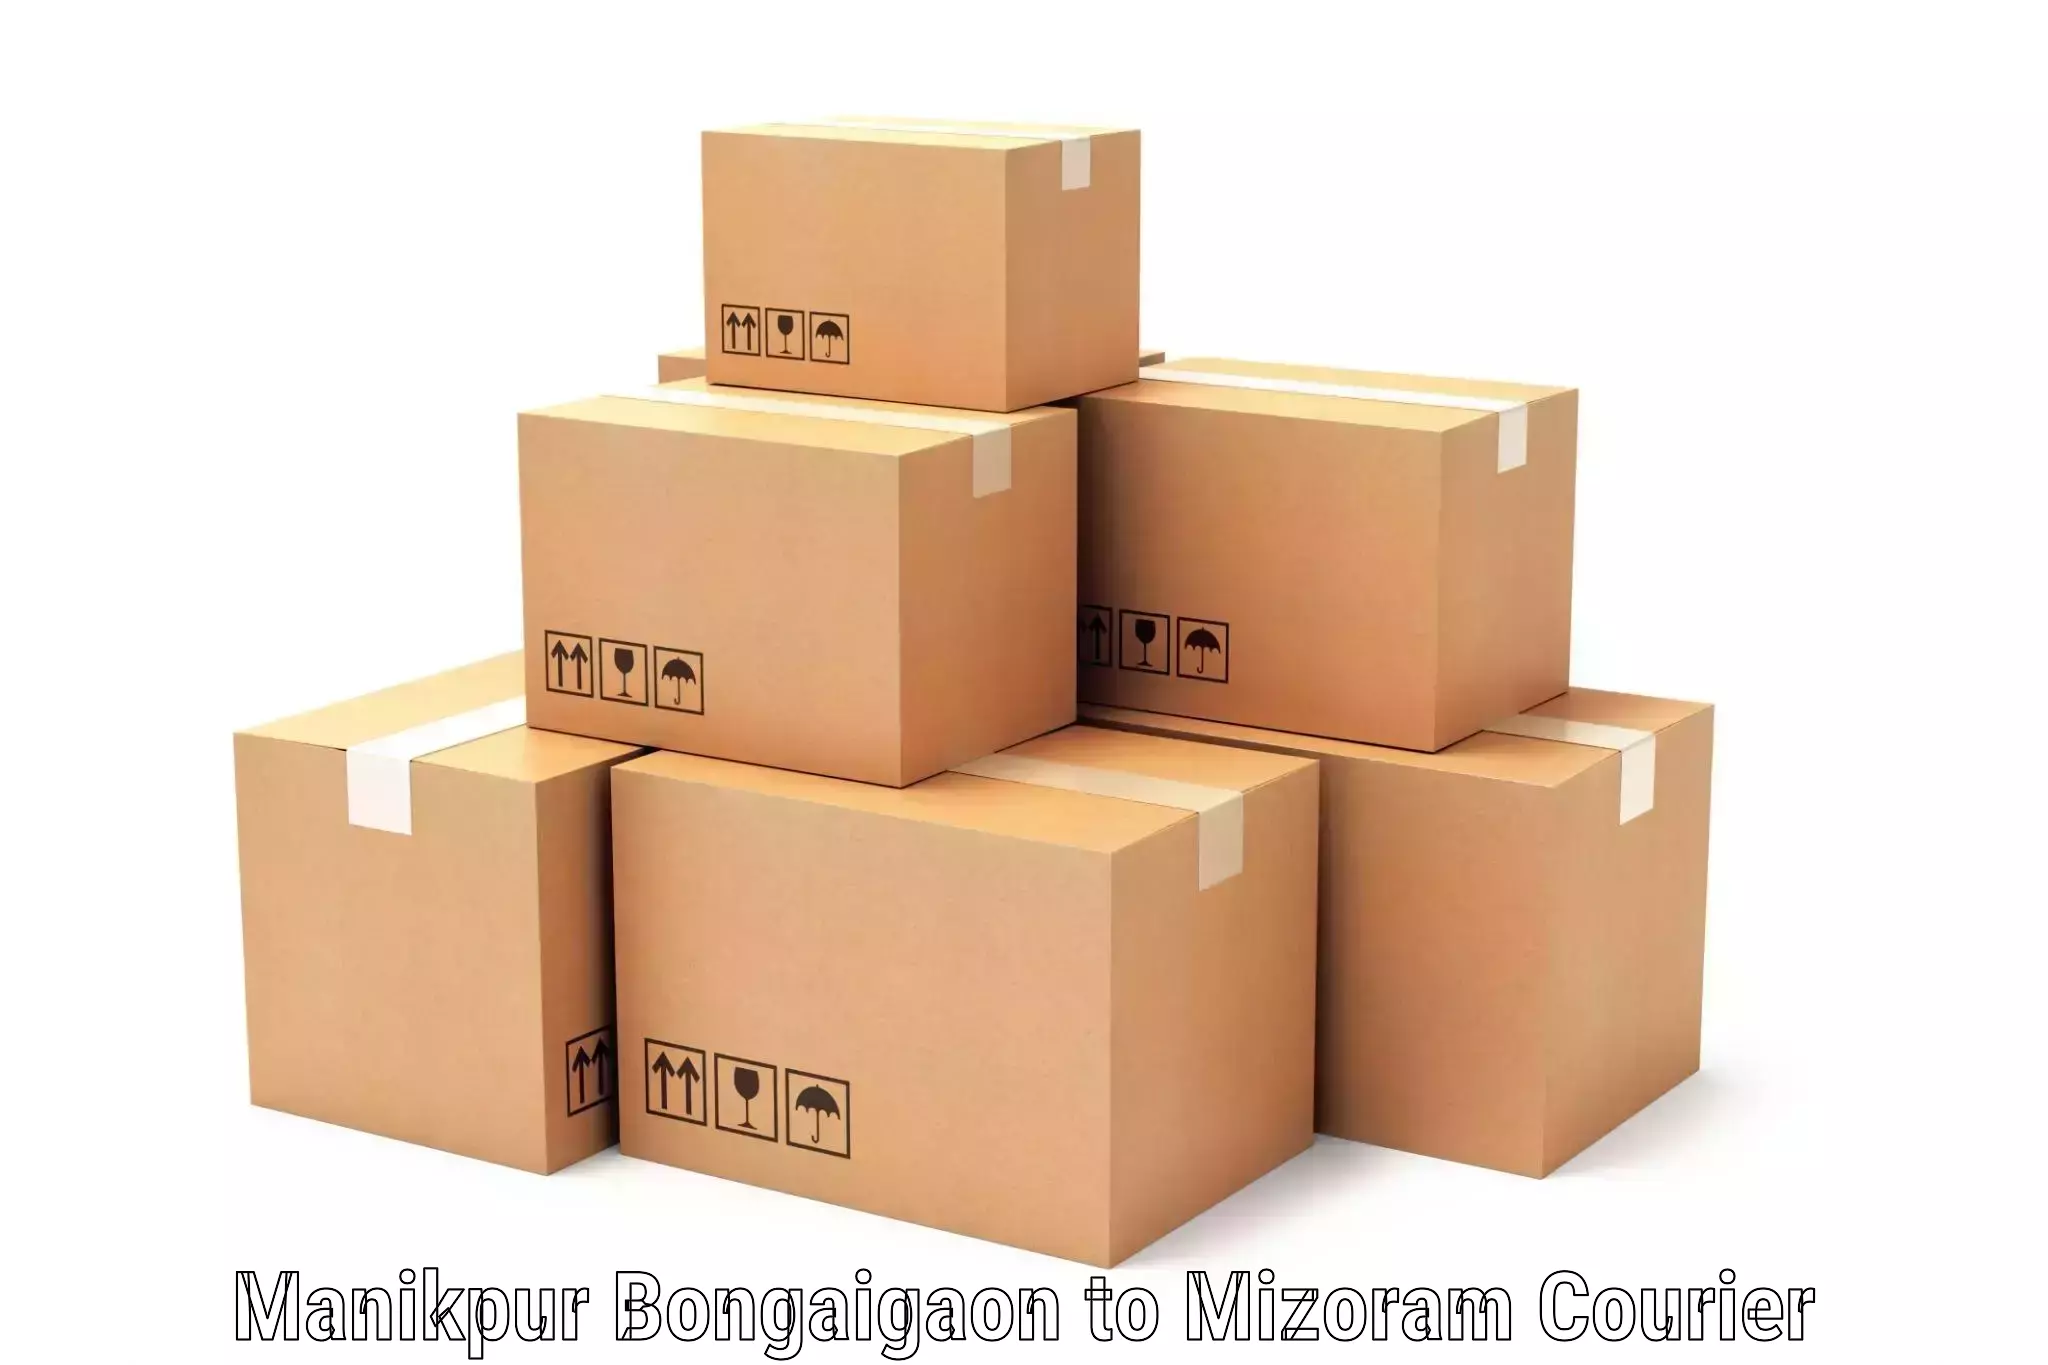 Courier service innovation Manikpur Bongaigaon to Serchhip